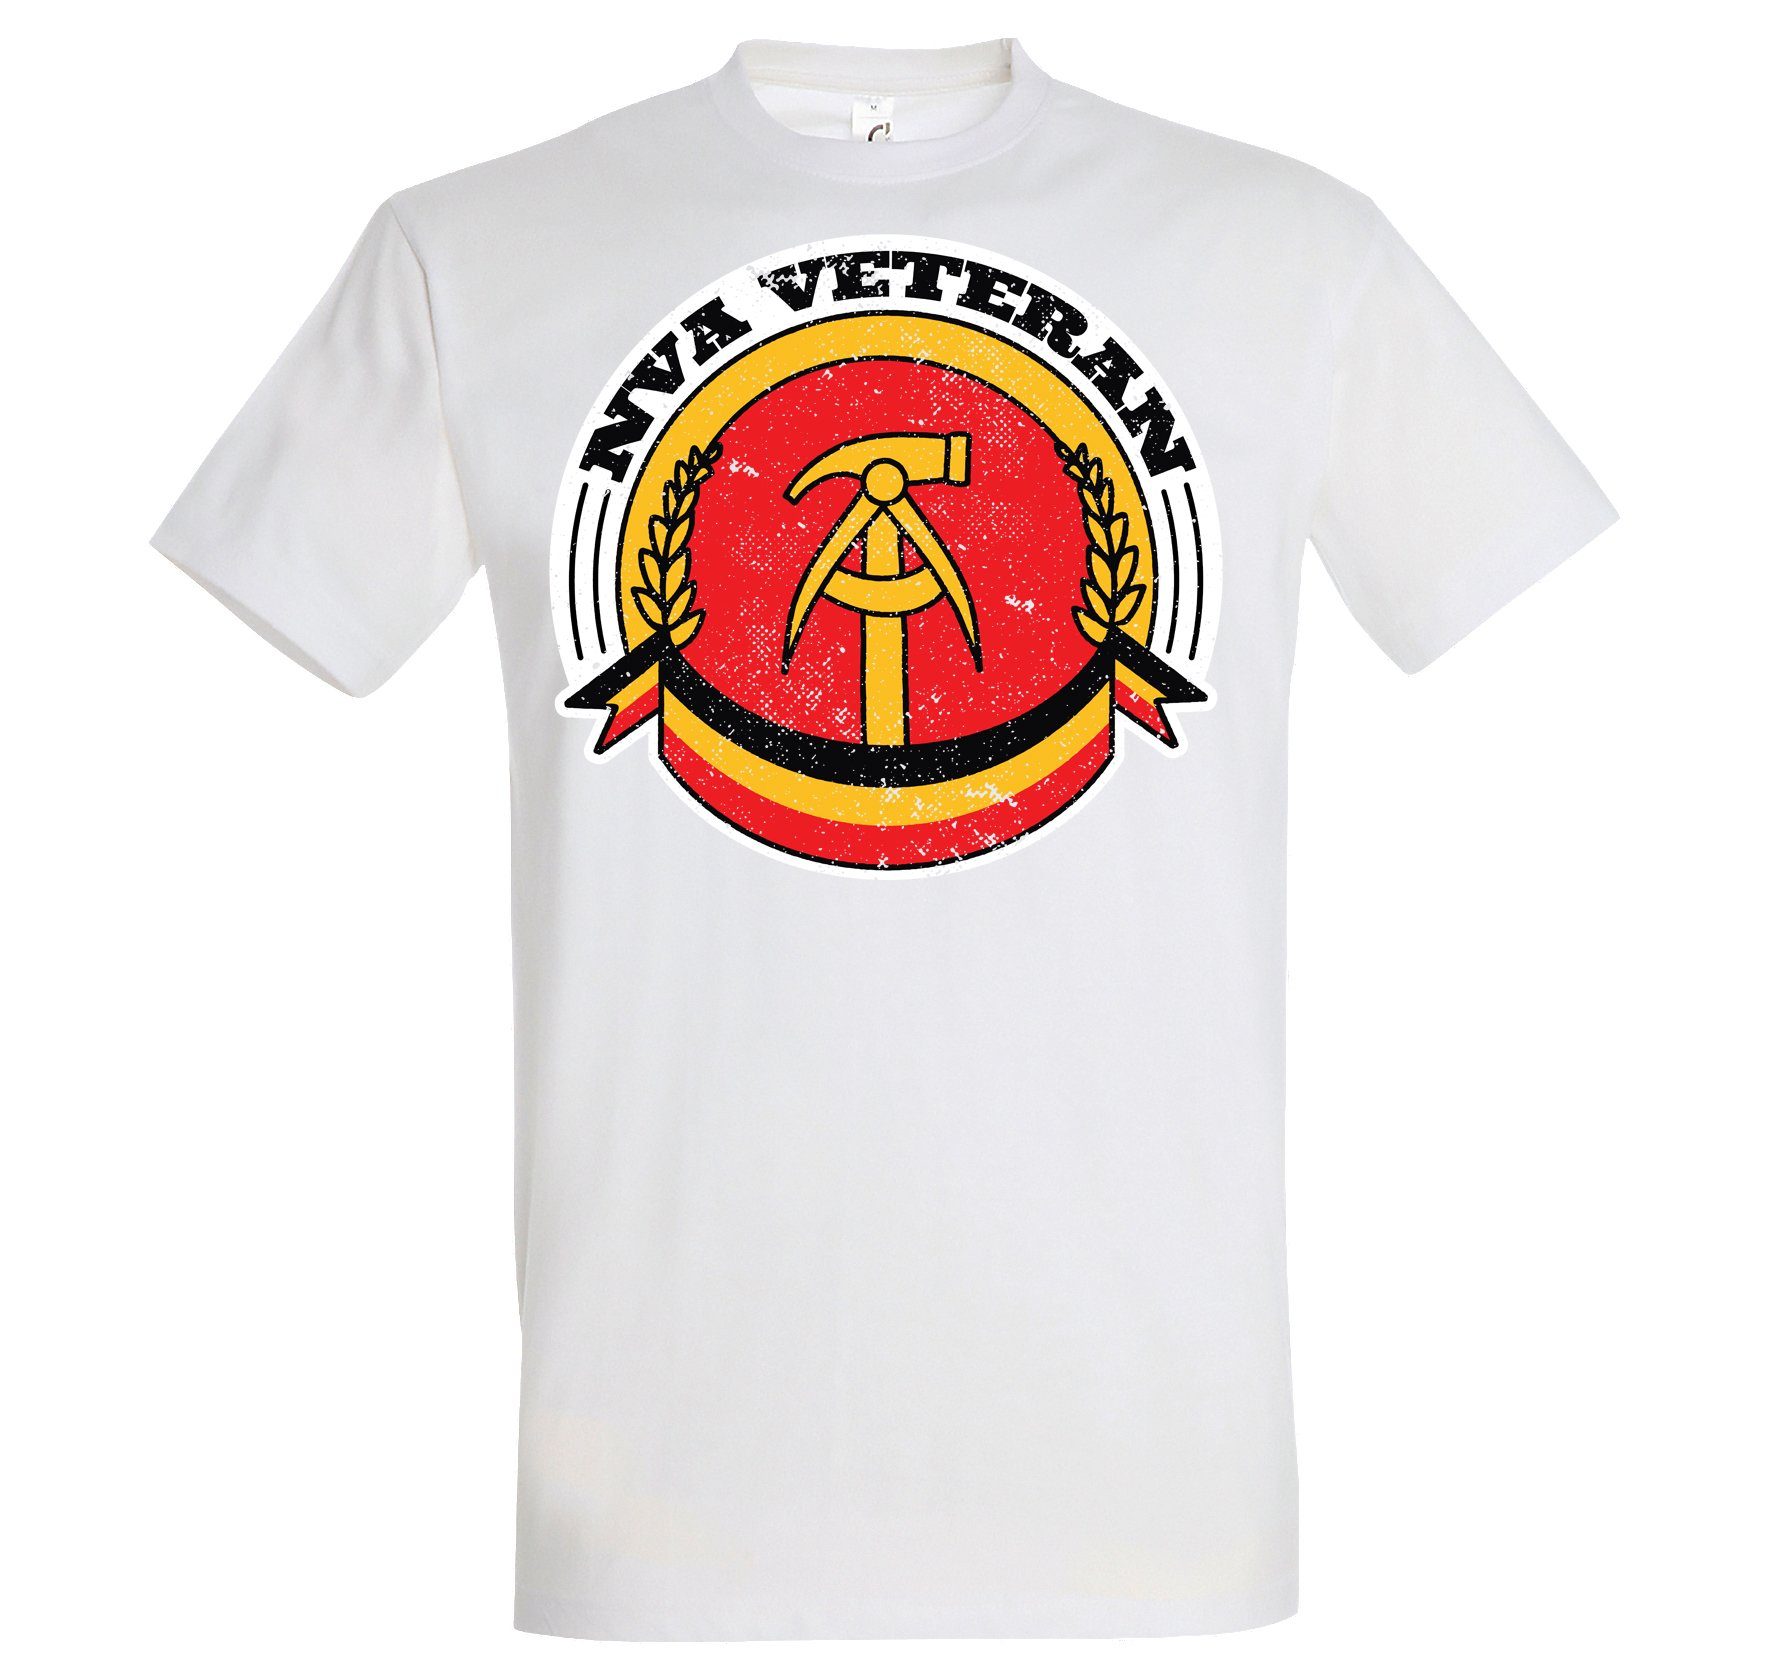 Veteran trendigem NVA Frontprint T-Shirt Herren Designz Weiß Shirt Youth mit